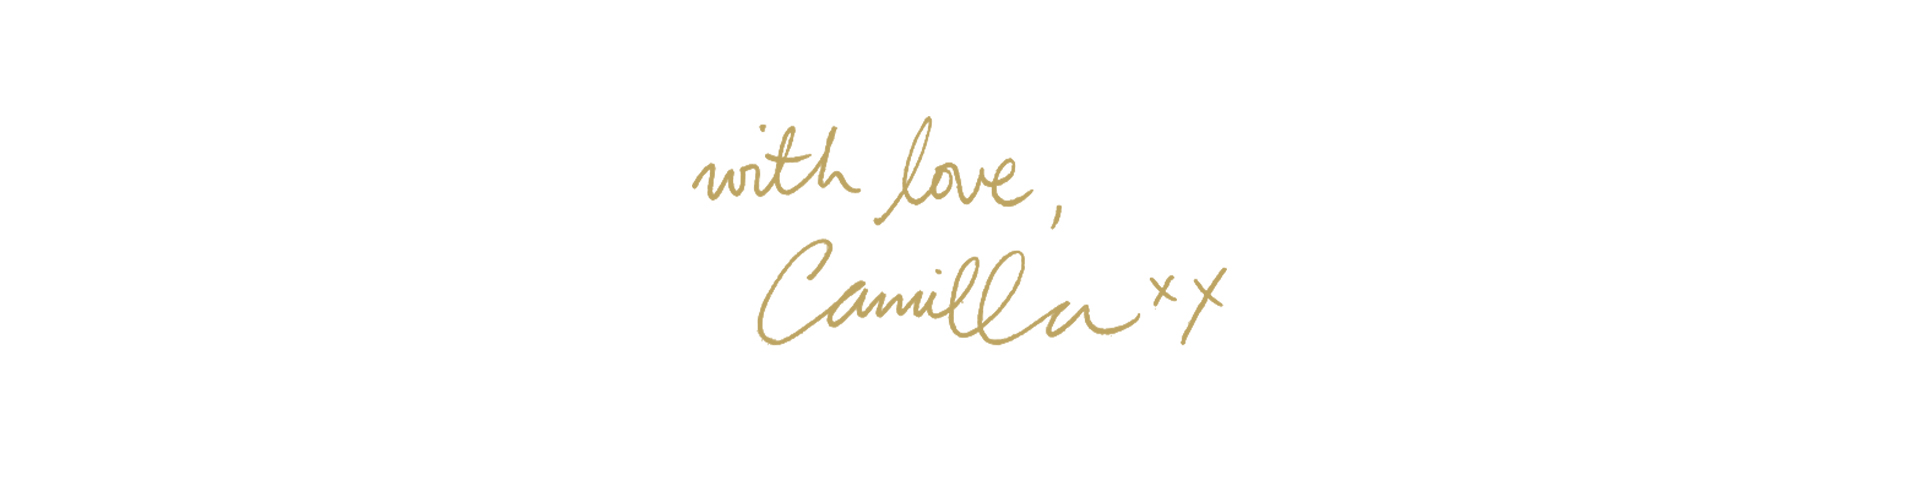 with love, Camilla xx